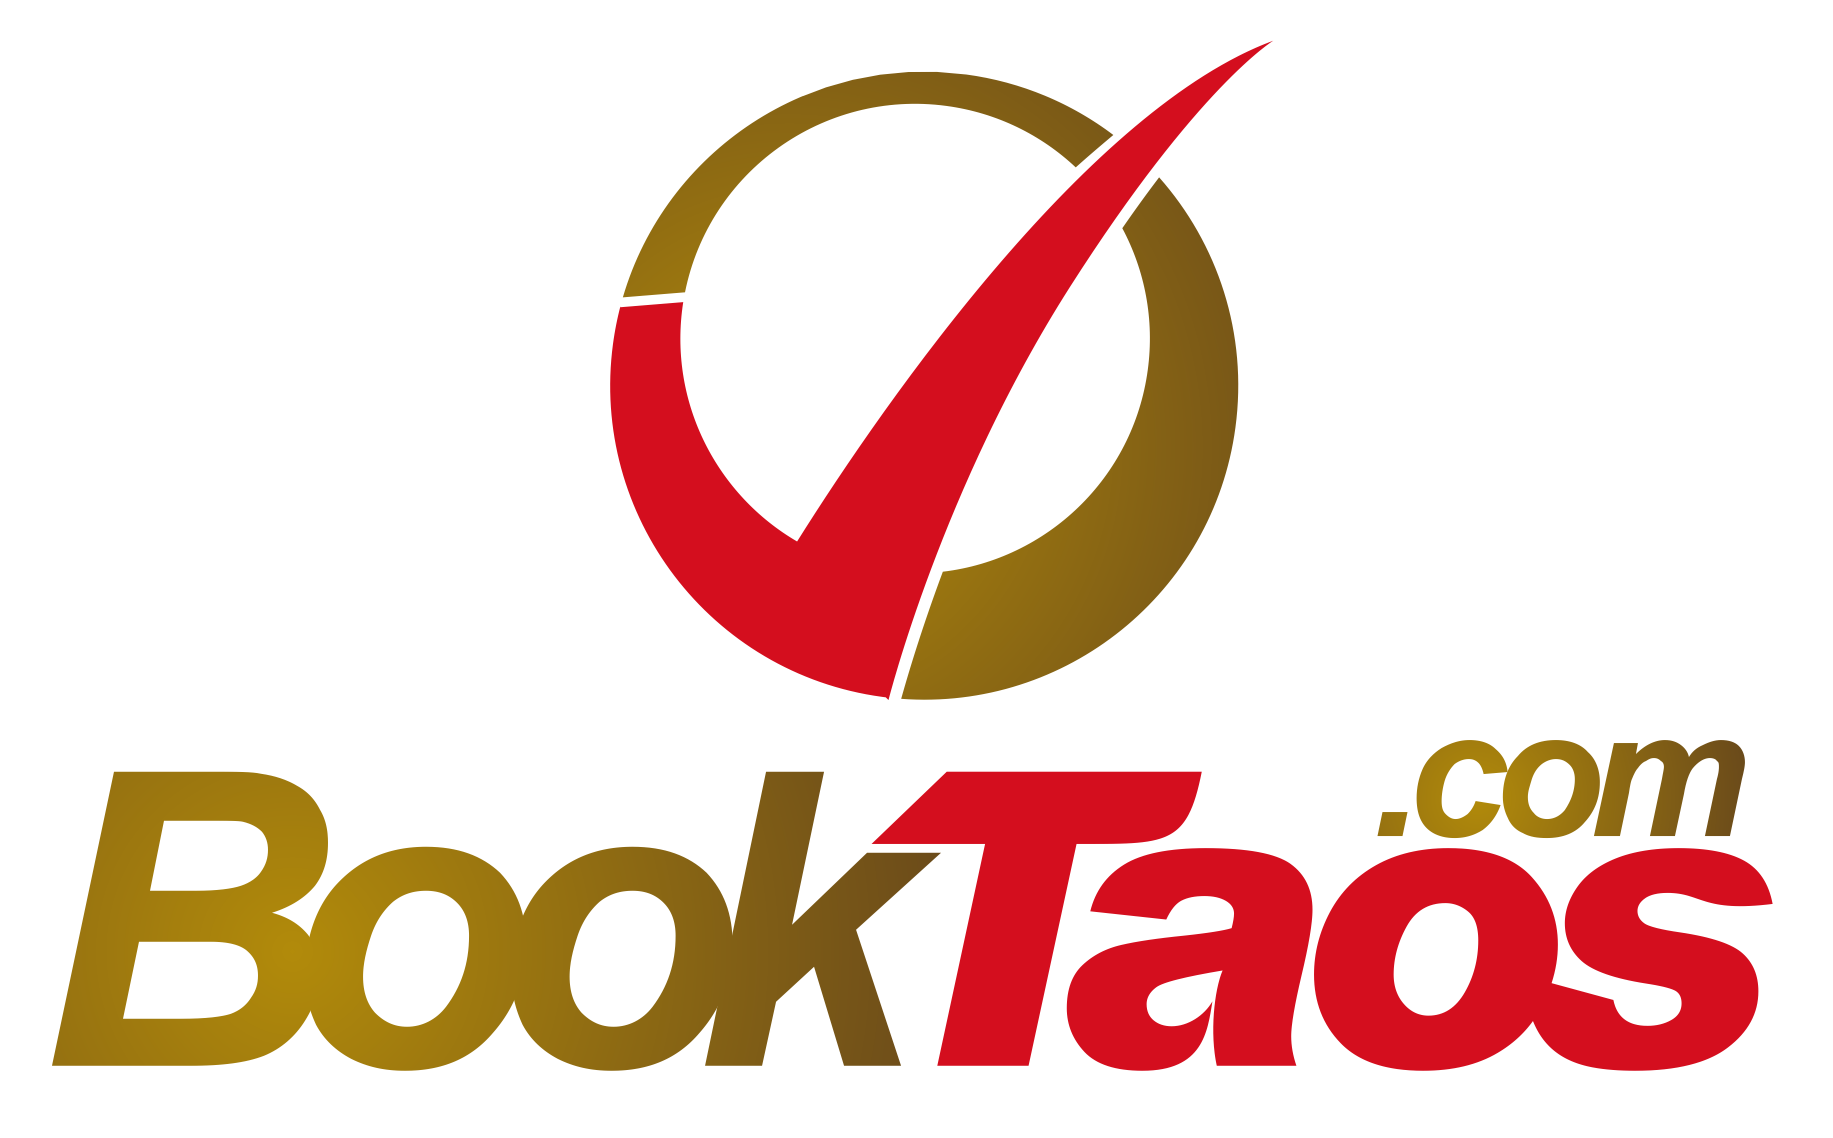 BookTaos.com